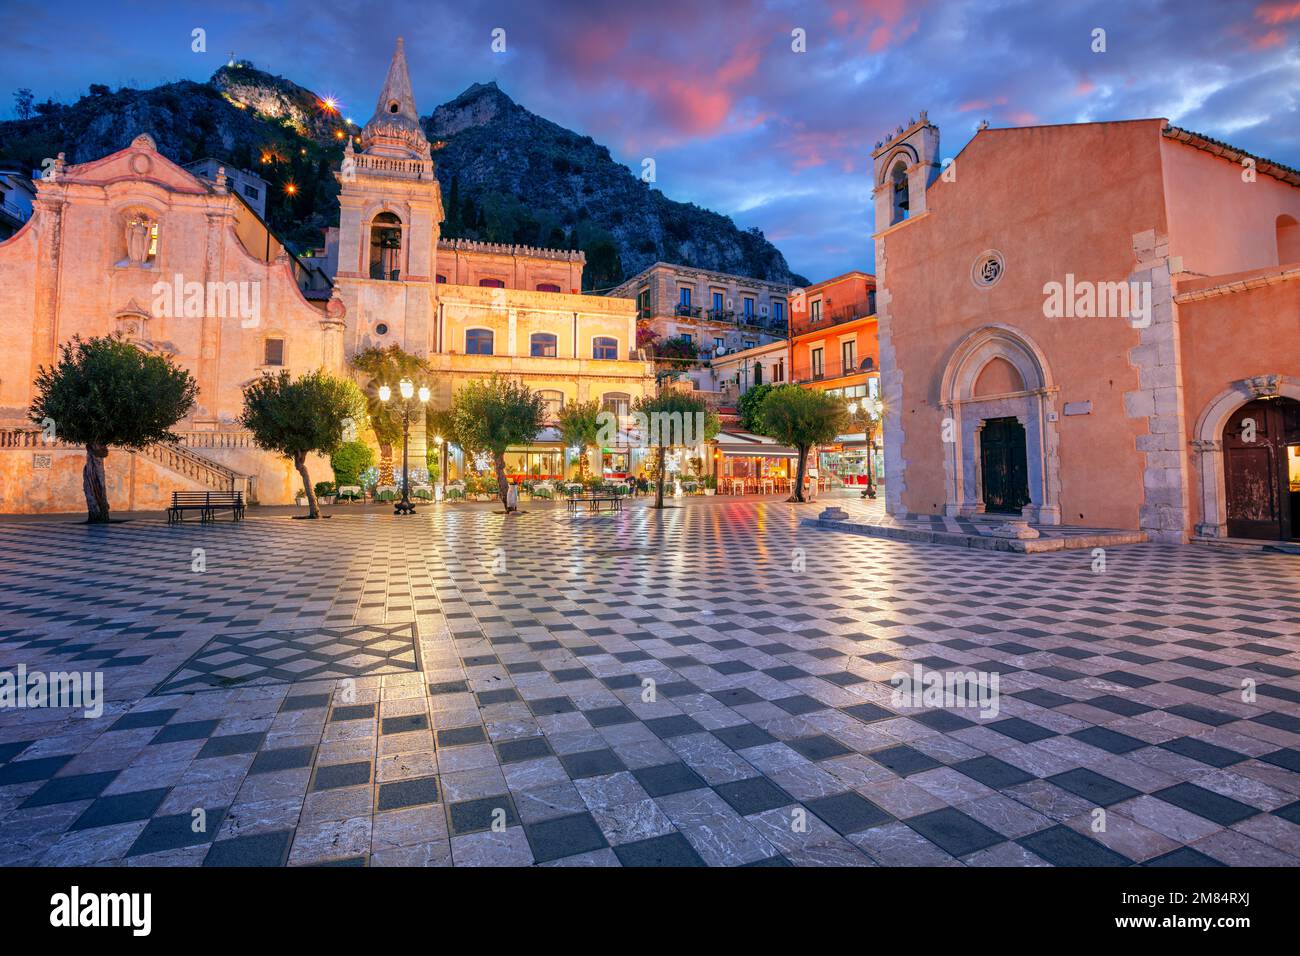 Taormina, Sizilien, Italien. Stadtbild der malerischen Stadt Taormina, Sizilien mit Hauptplatz Piazza IX Aprile und Kirche San Giuseppe bei Sonnenuntergang. Stockfoto